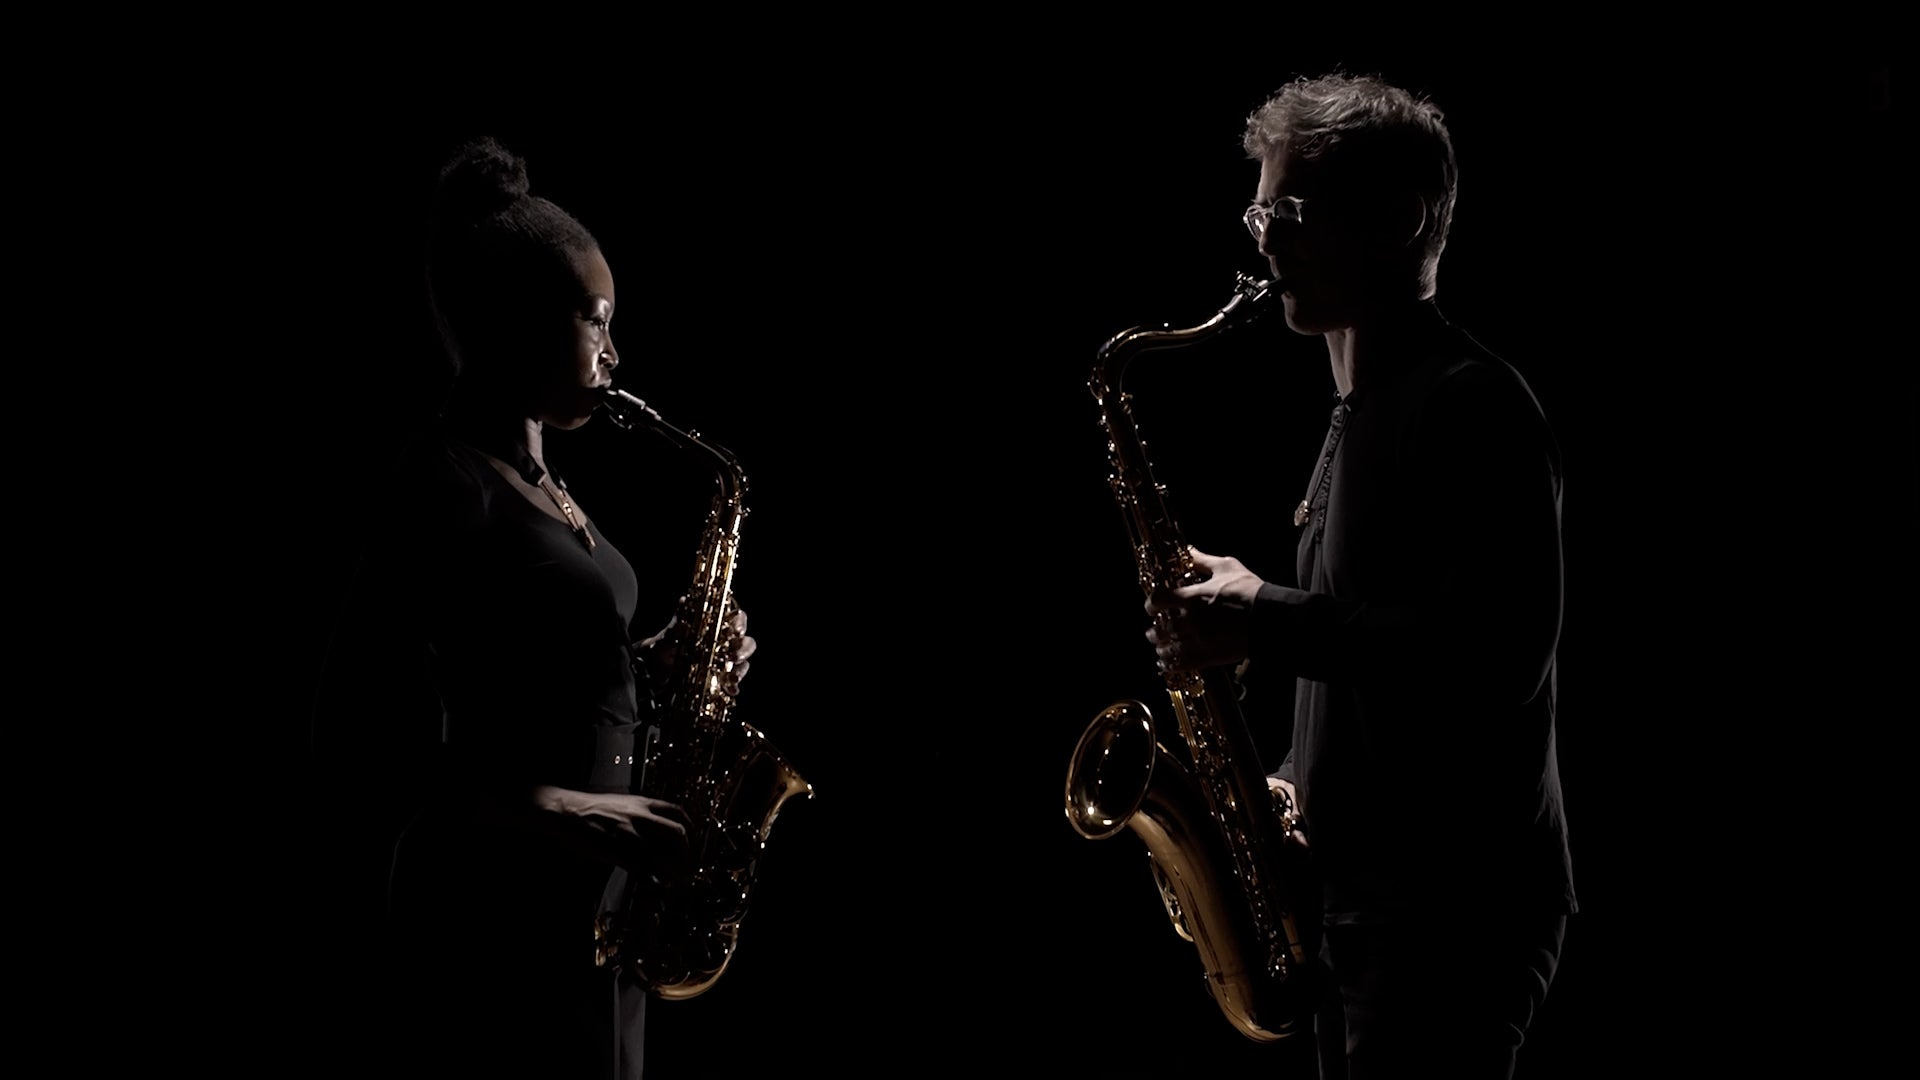 Load video: Signature saxophones